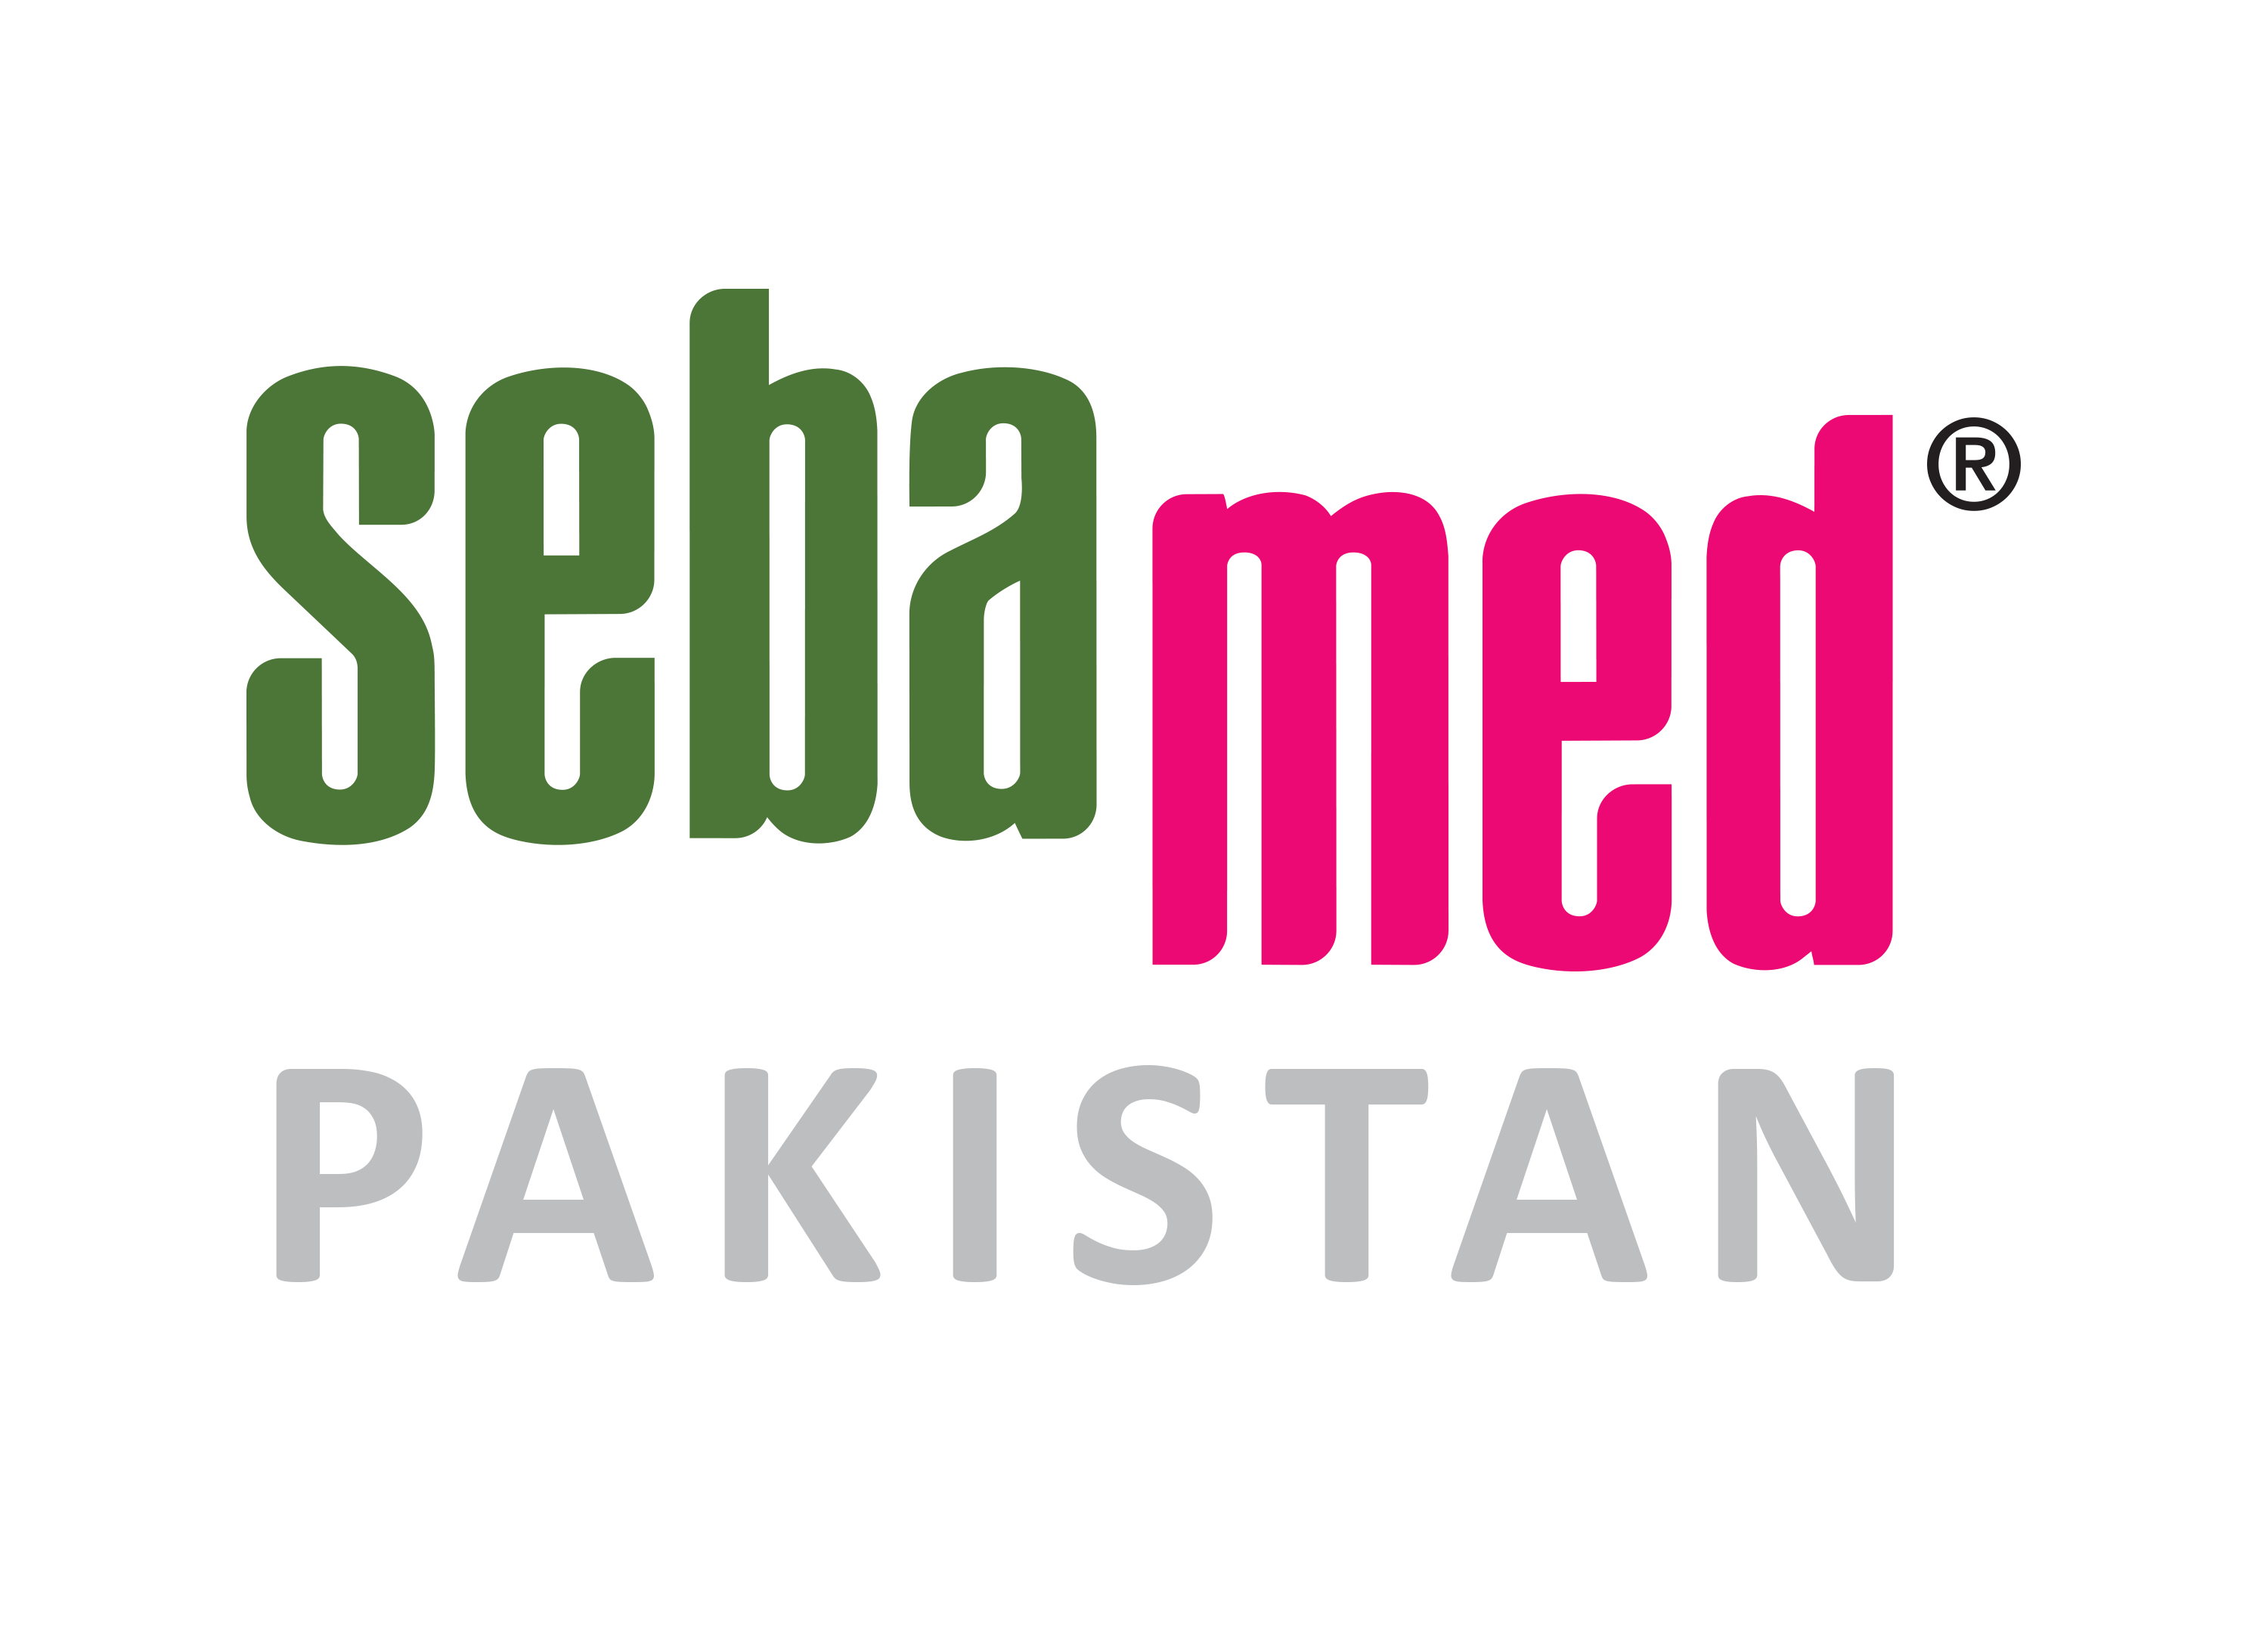 Sebamed Pakistan